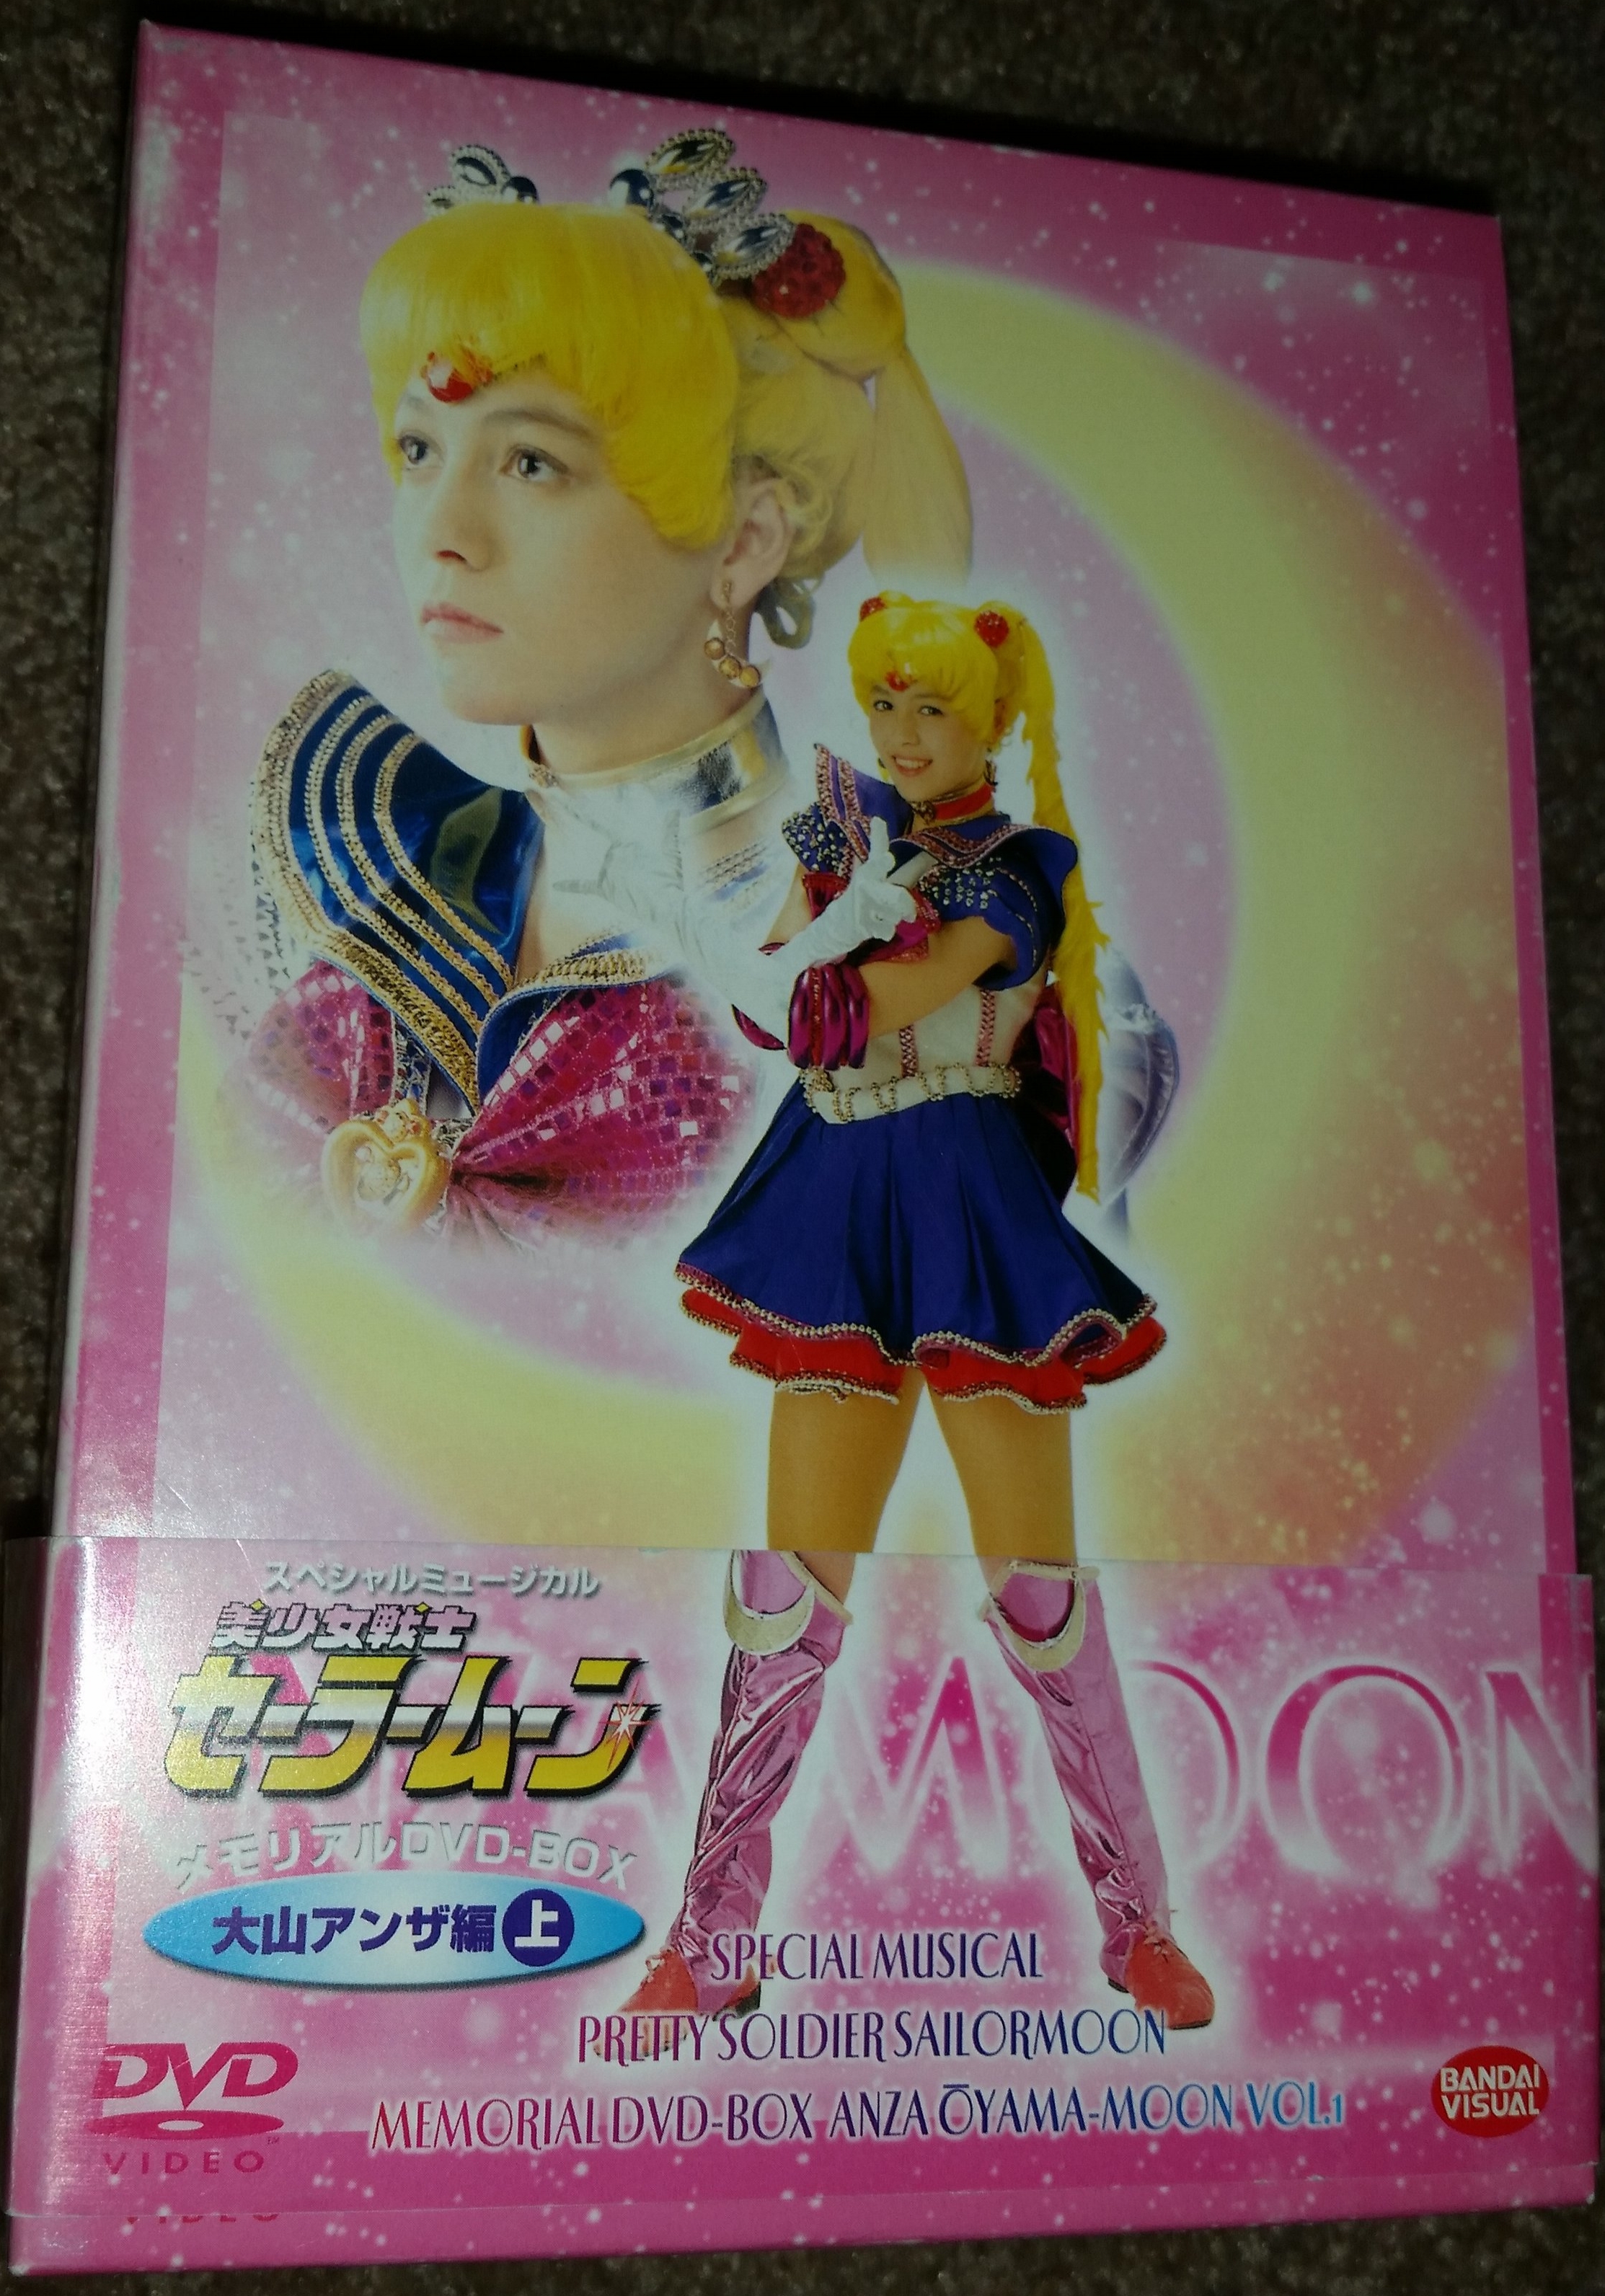 Sailor Moon DVD box poster